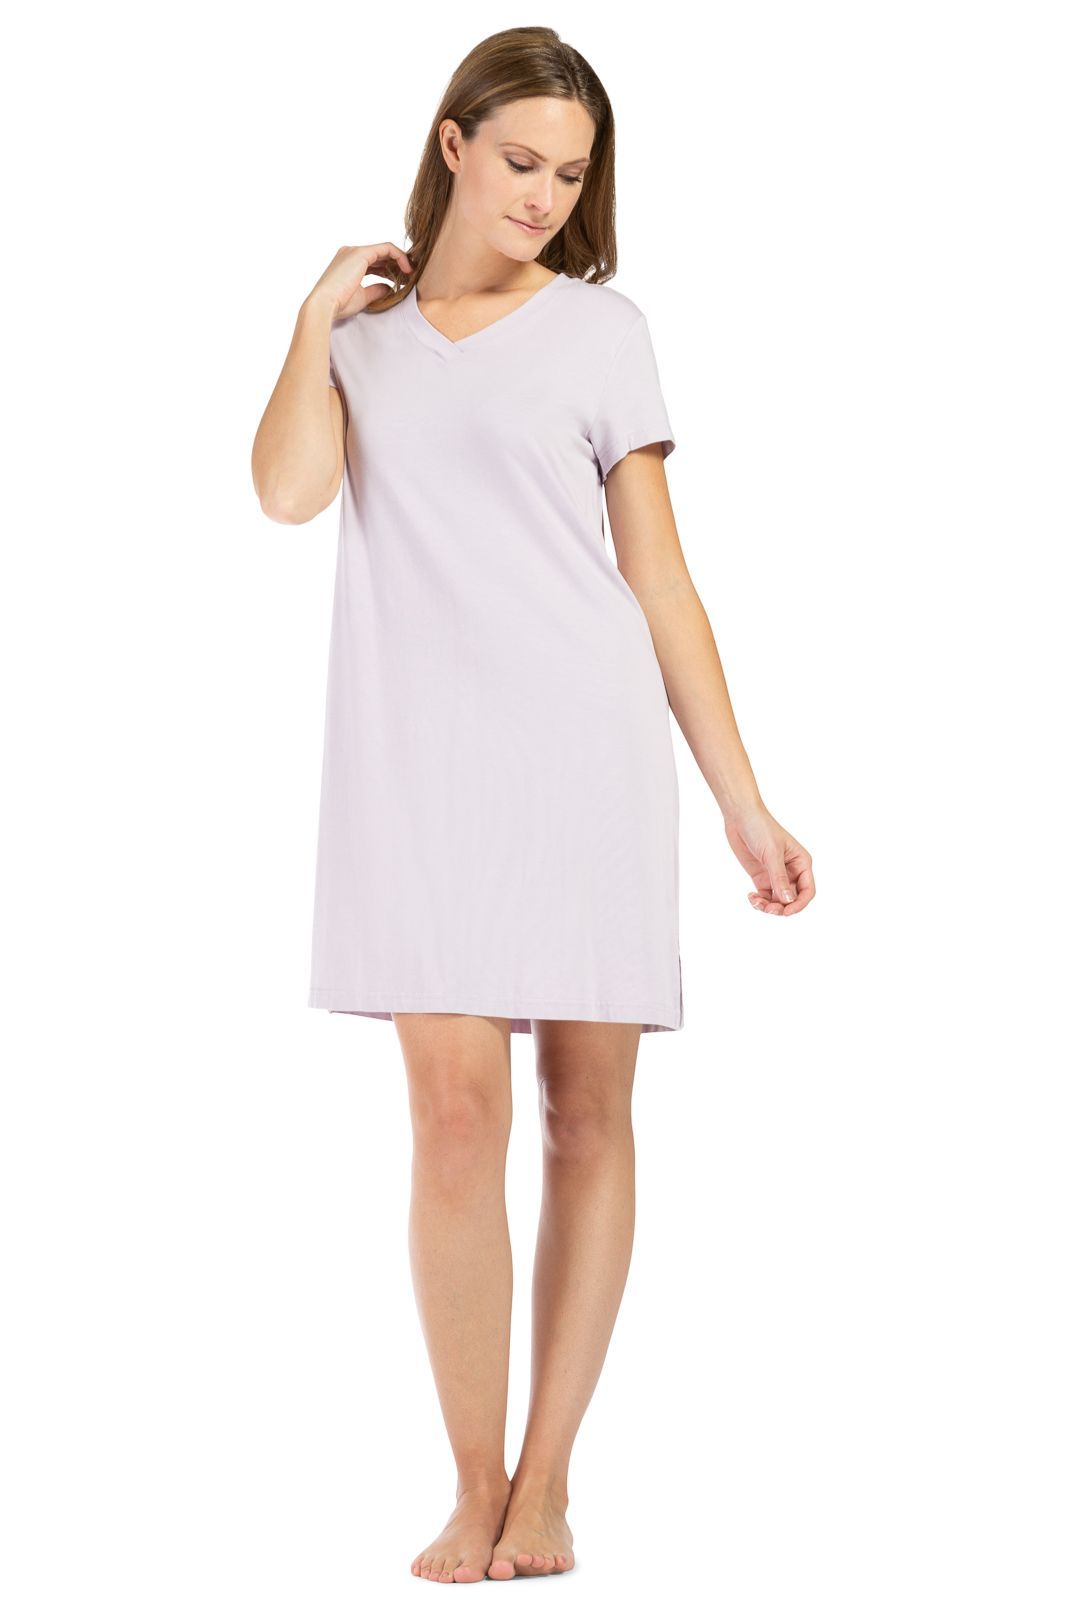 Women's Sleep Shirts & Nightgowns Loungewear